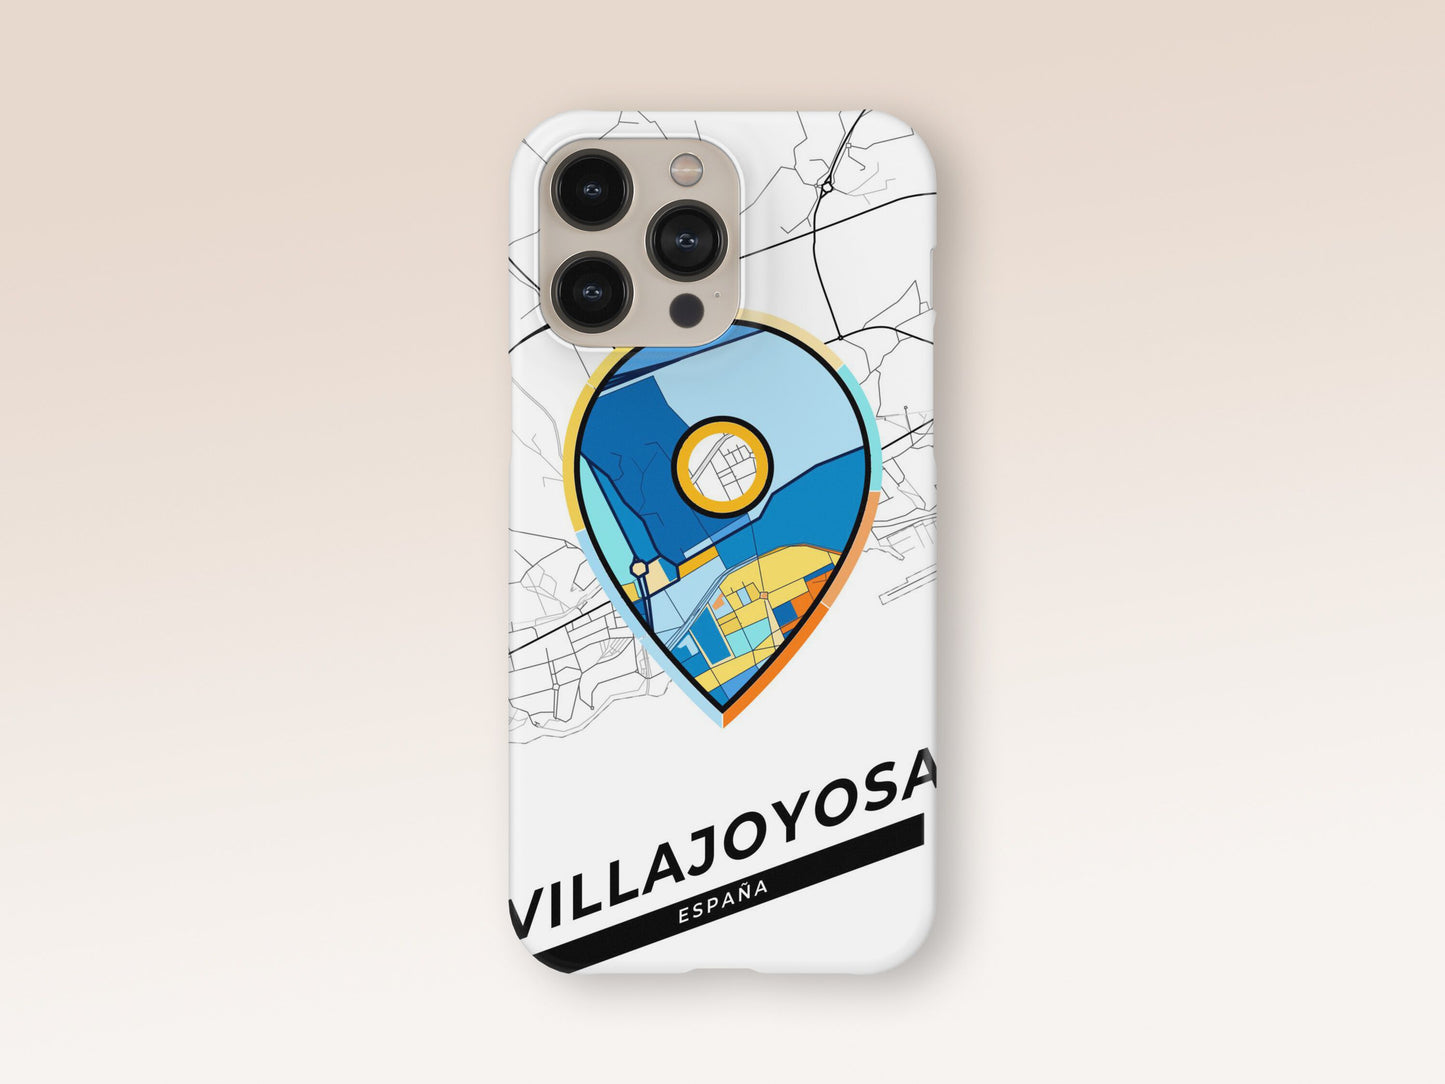 Villajoyosa Spain slim phone case with colorful icon 1